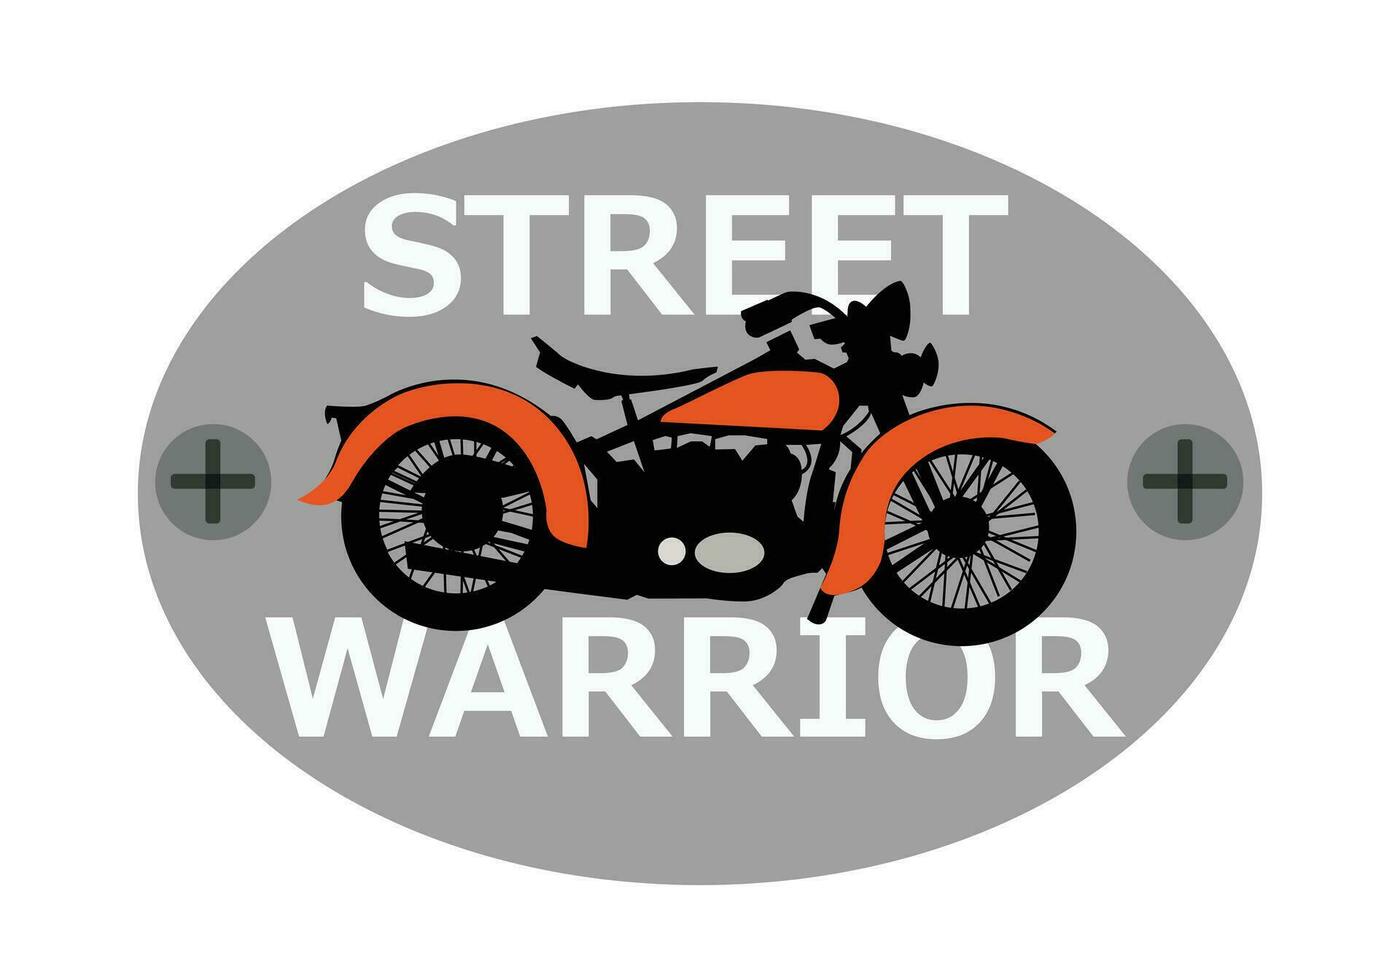 street warrior logo vector for design purposes.